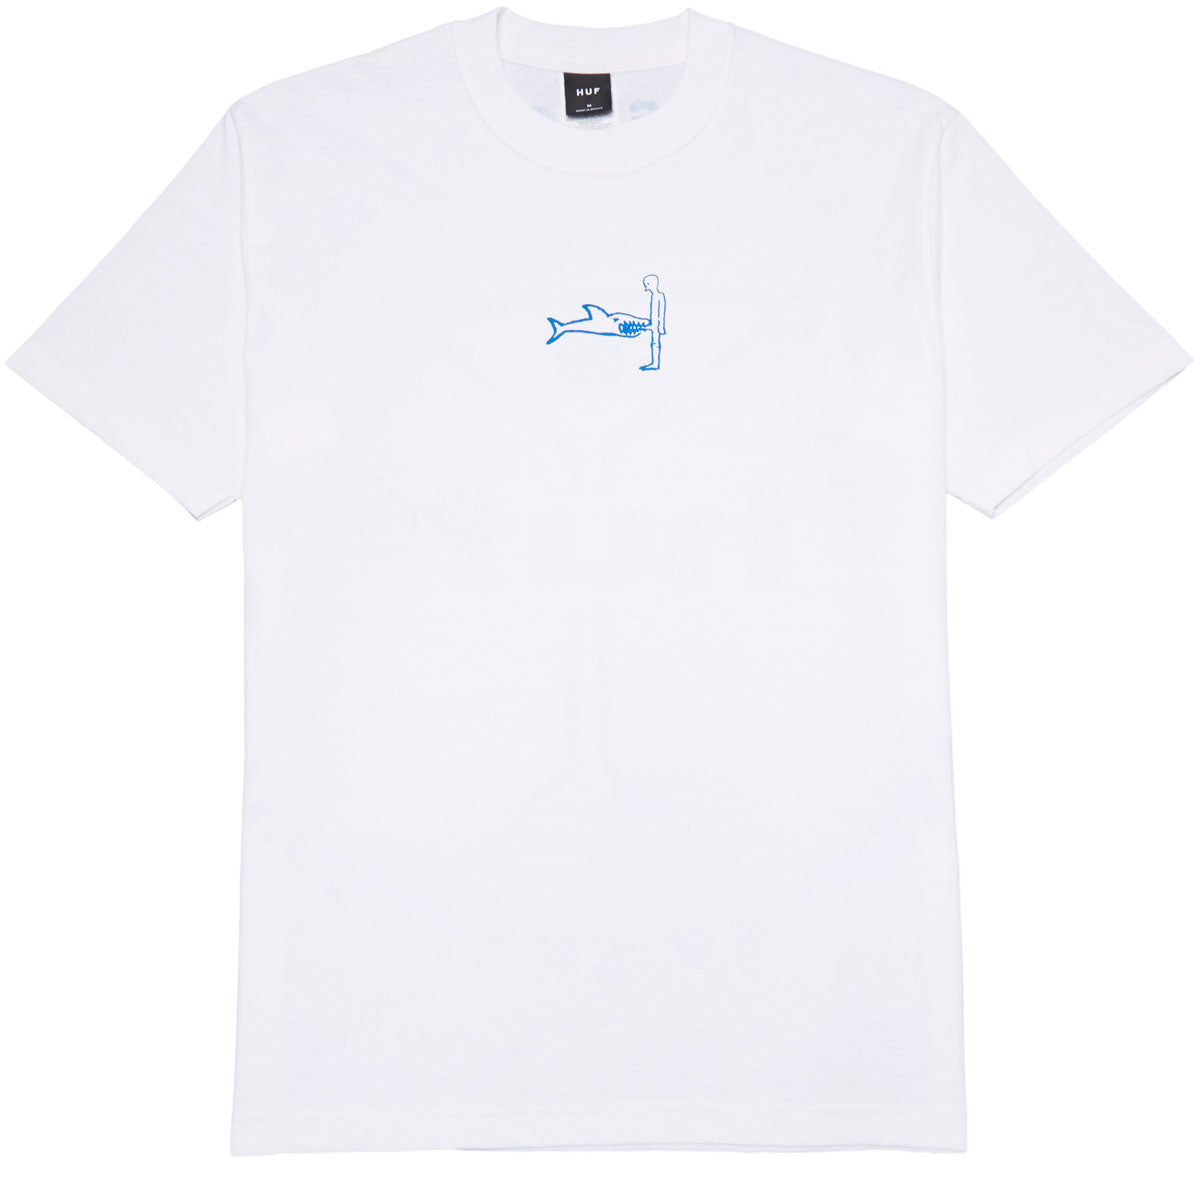 Huf x Alltimers Shark Attack T-Shirt - White image 2